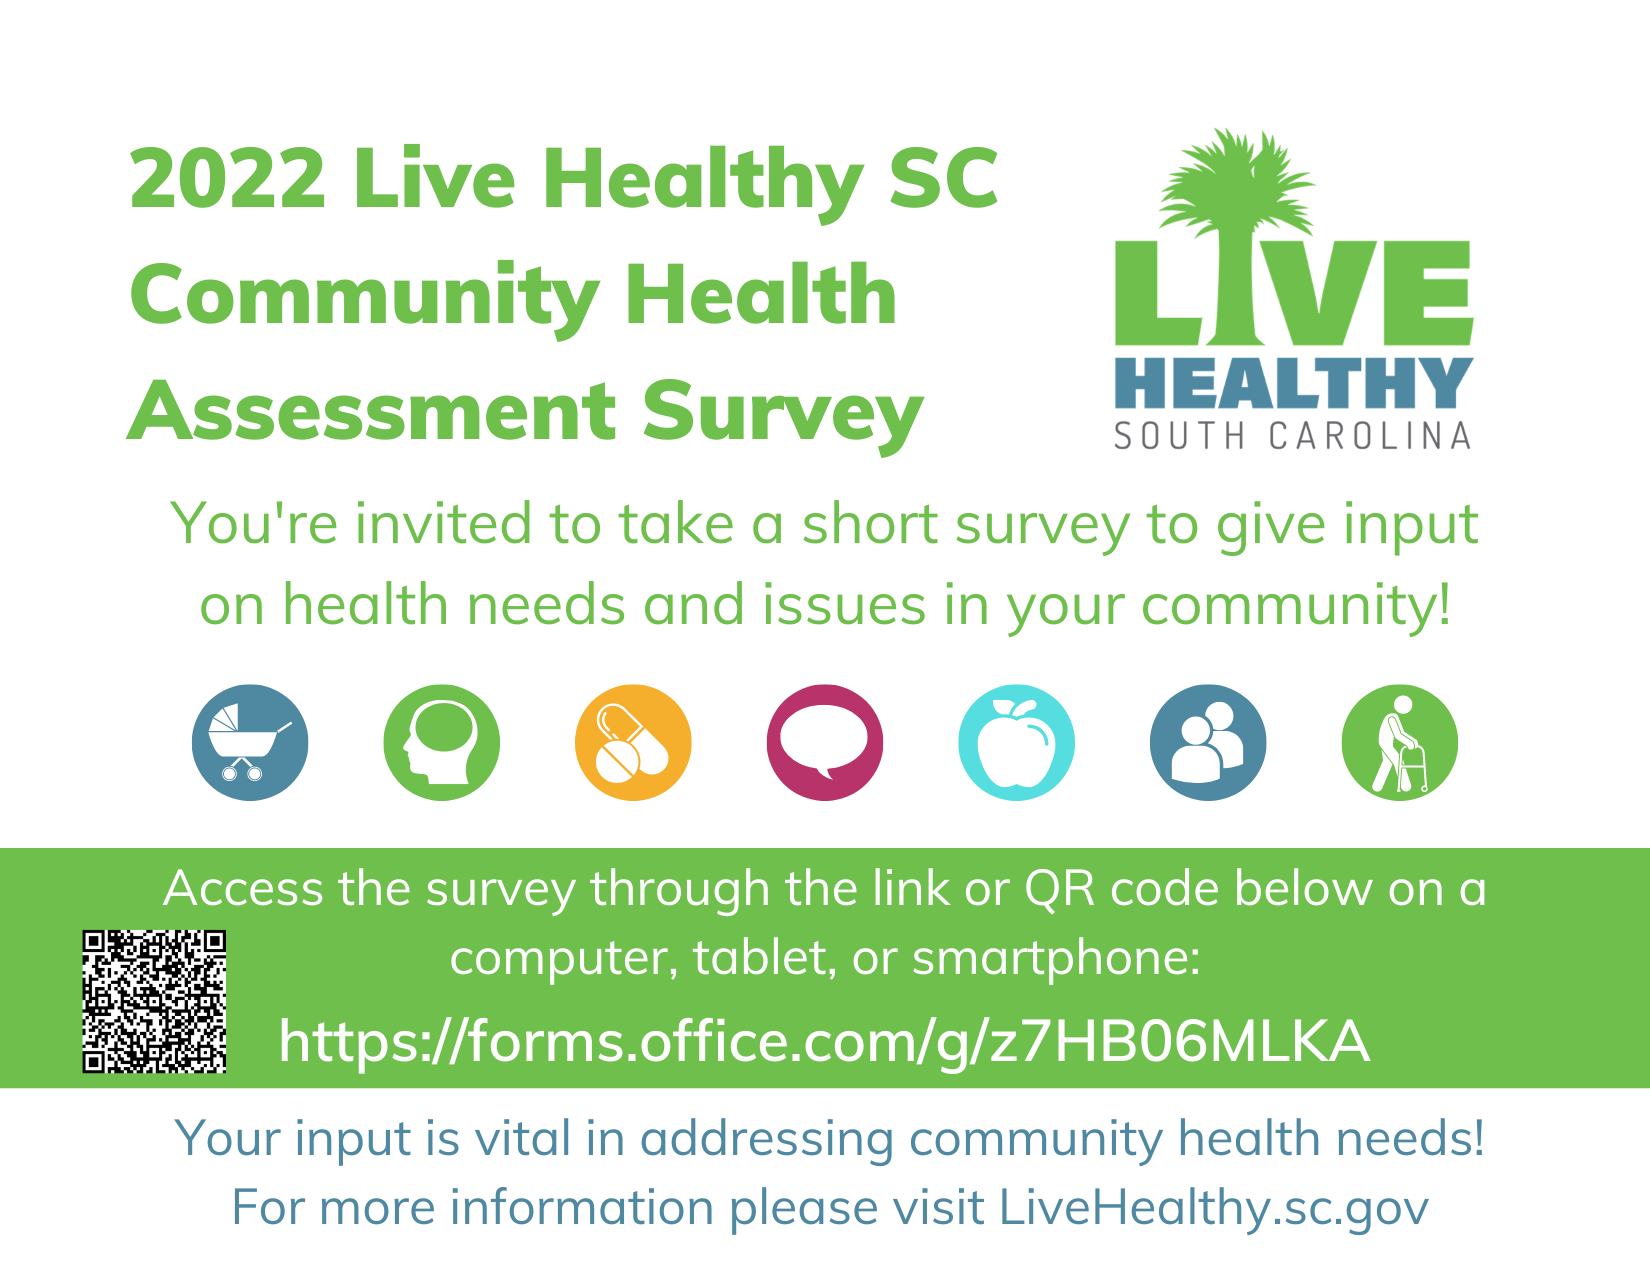 Live Healthy Postcard about Community Health Assessment Survey.